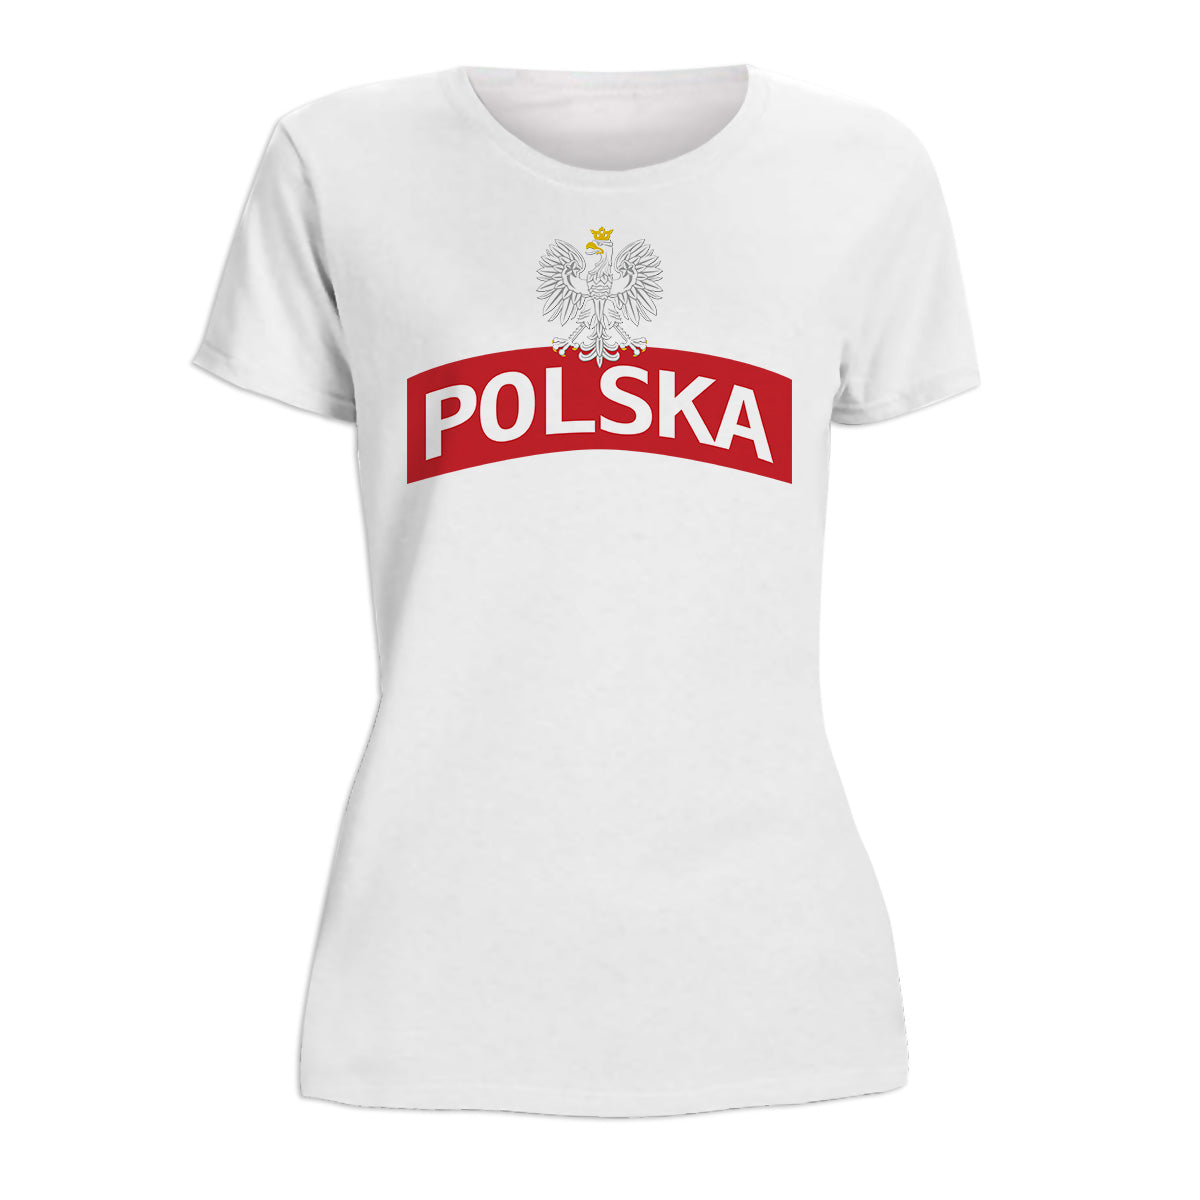 White Eagle Polska Women's Short Sleeve Tshirt